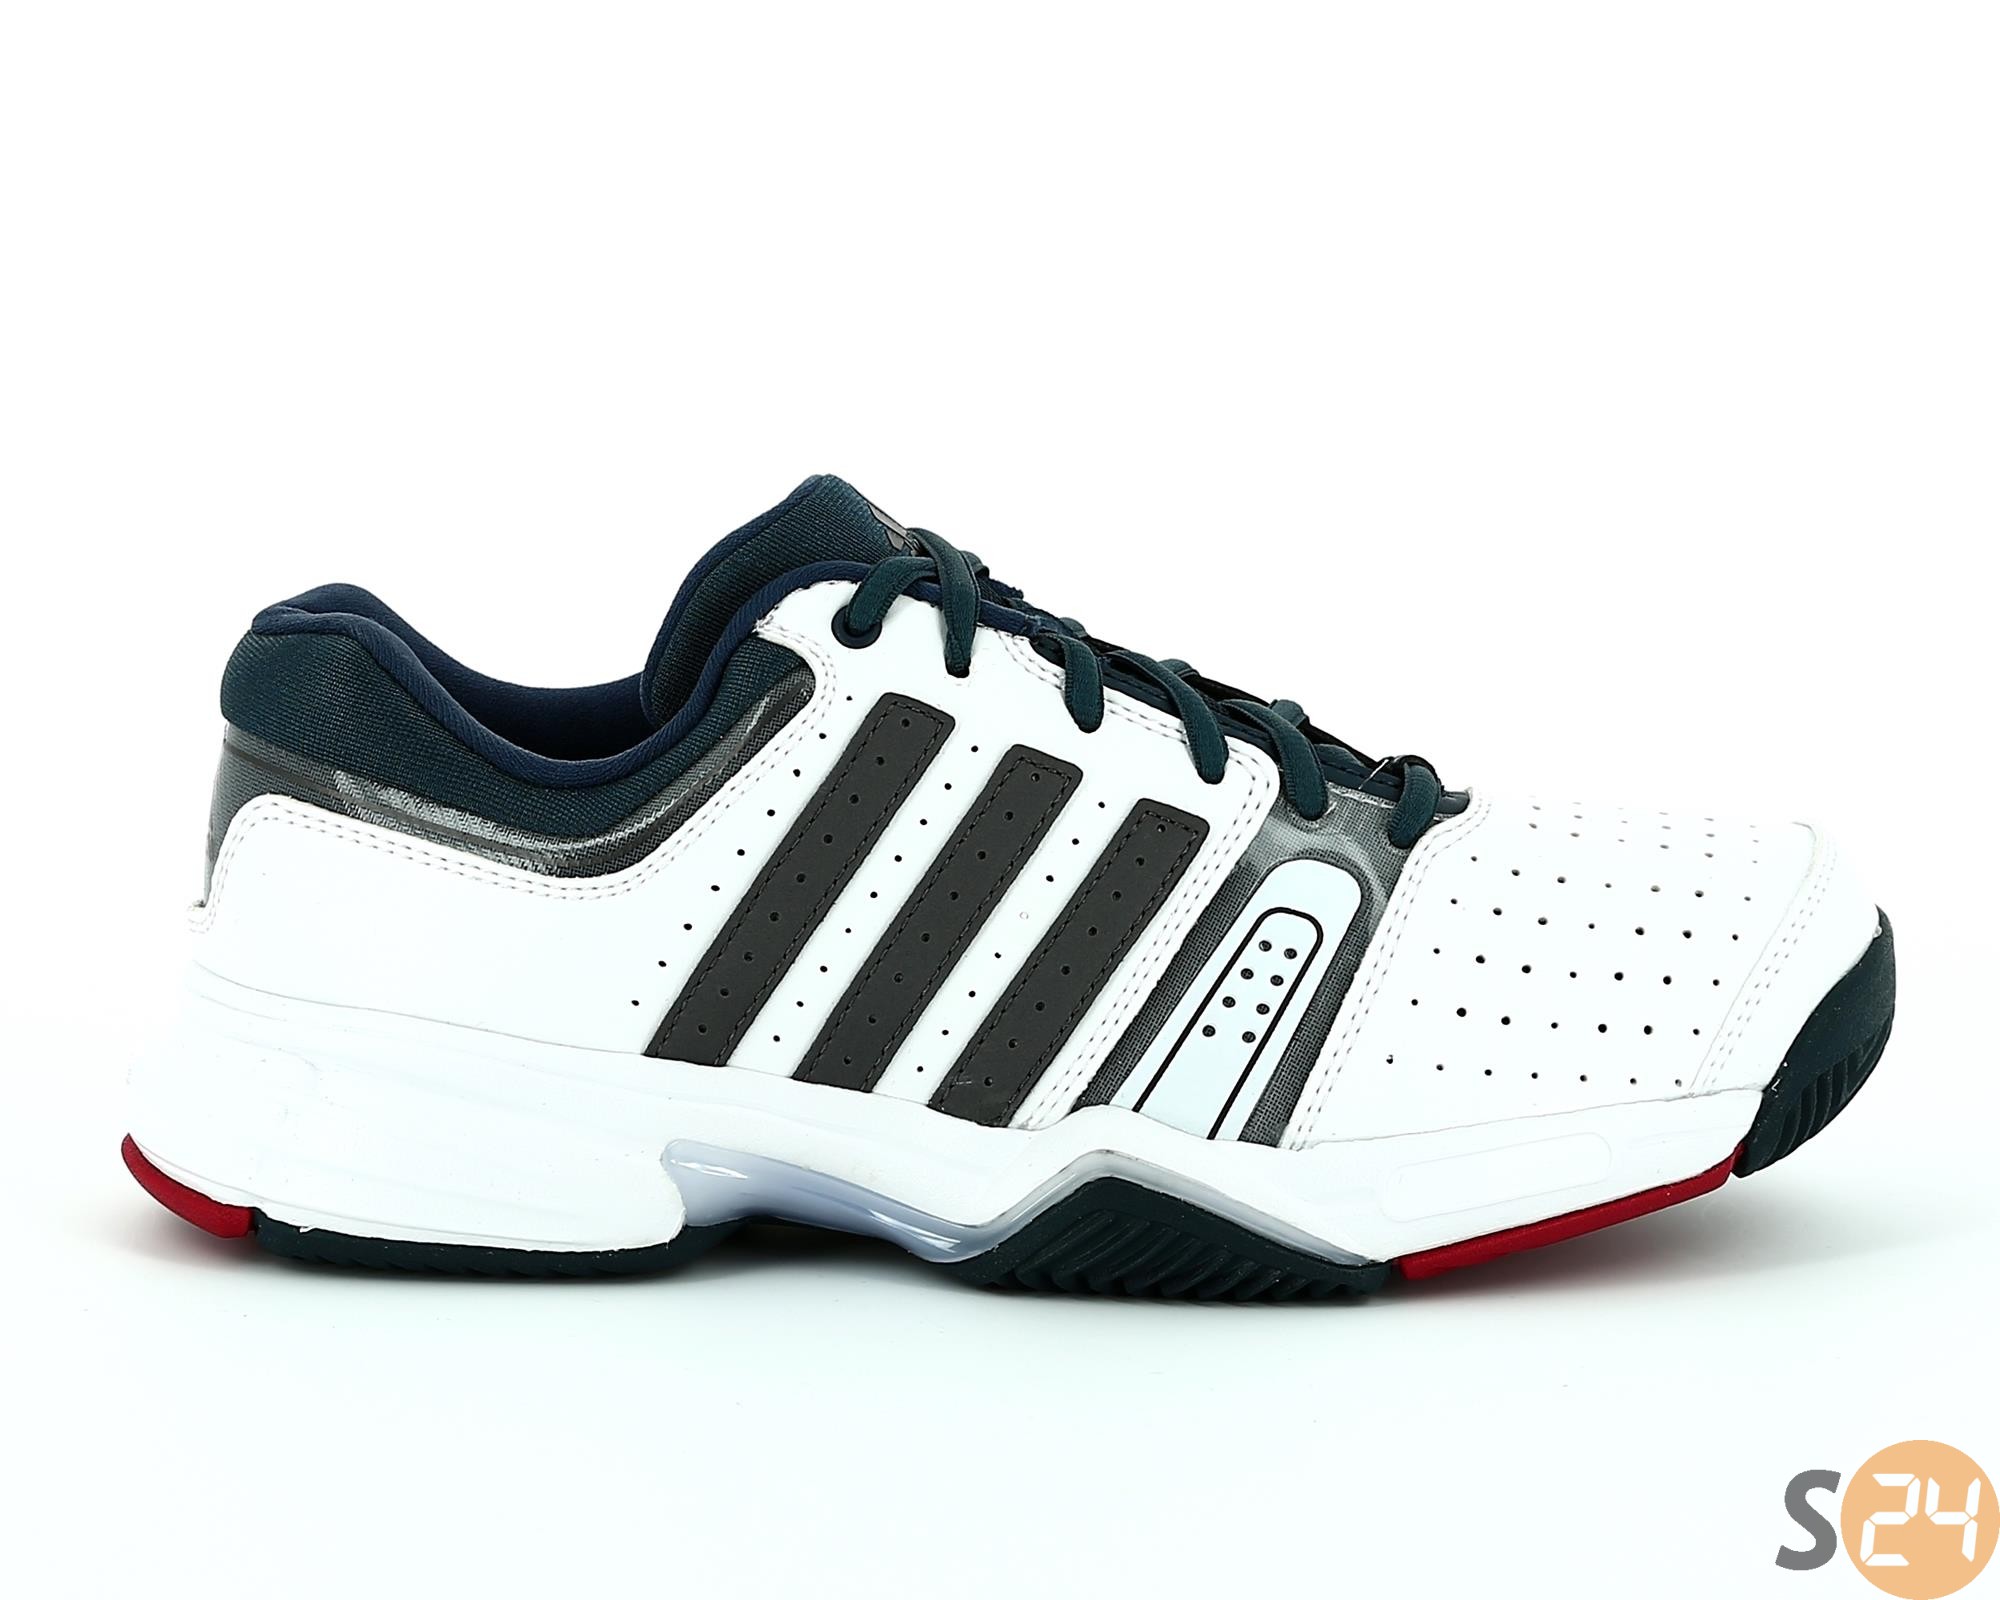 Adidas Teniszcipő Match classic B23082